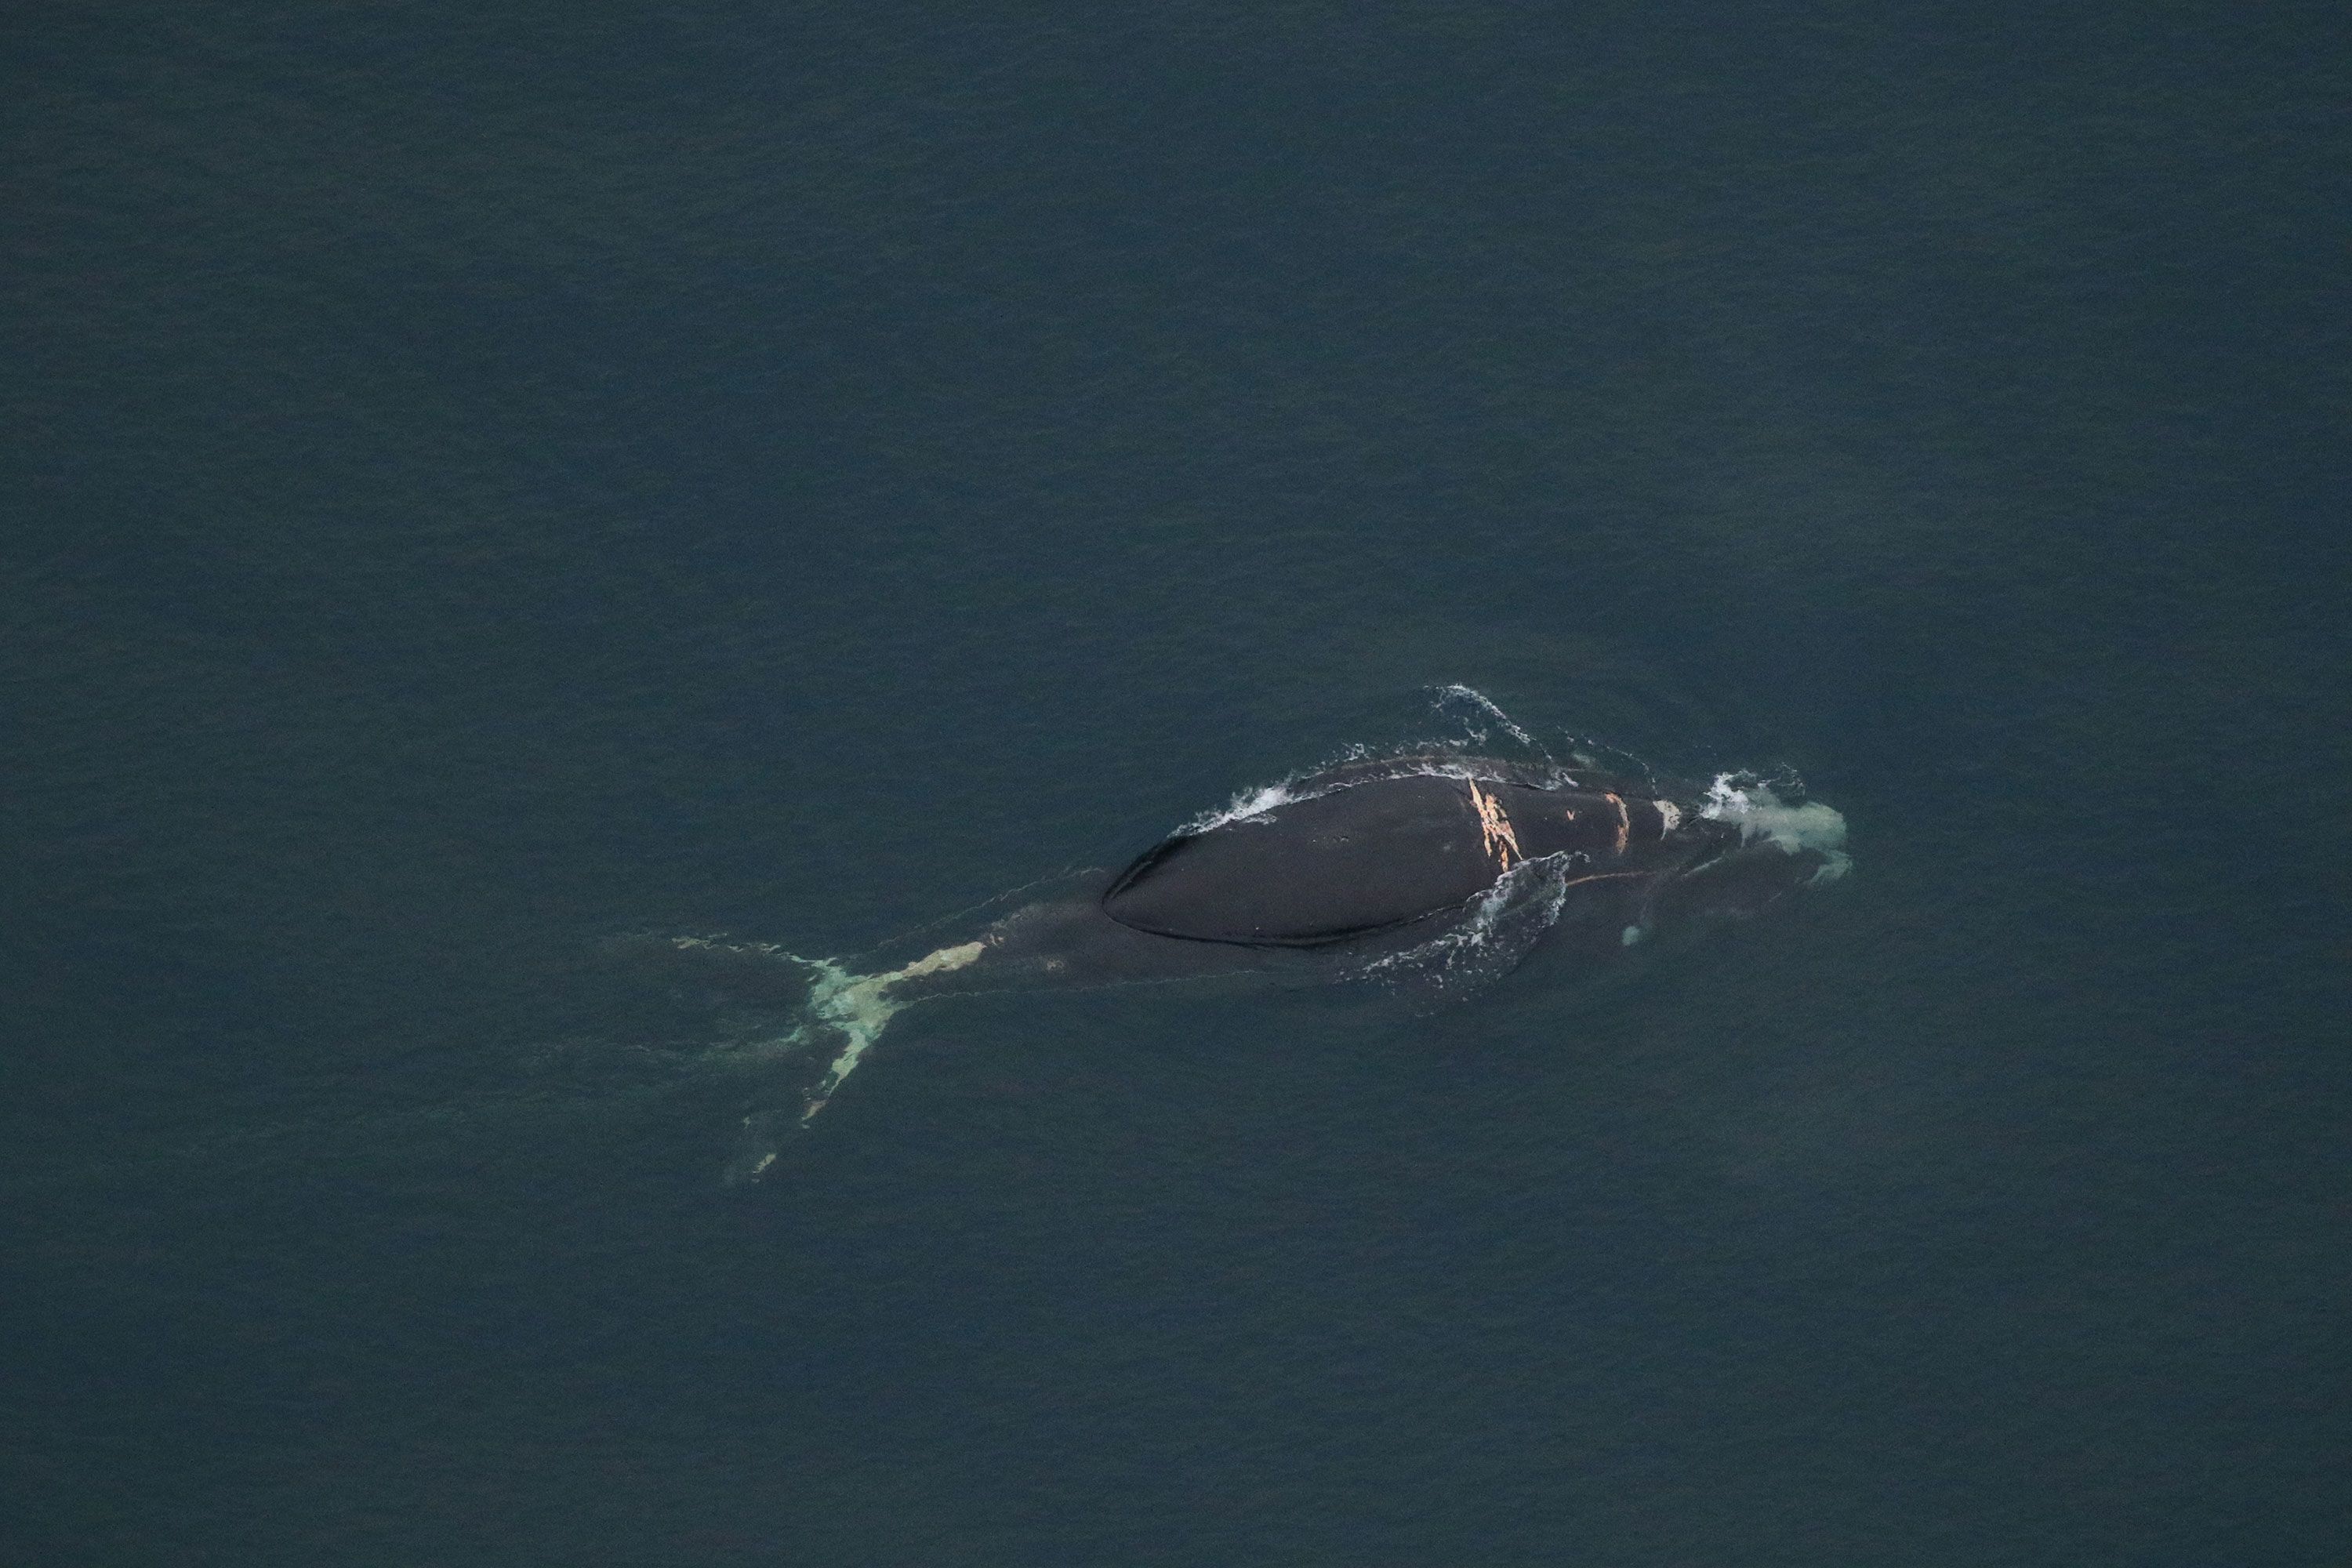 North Atlantic Right Whale Calf Stranded Dead in Florida